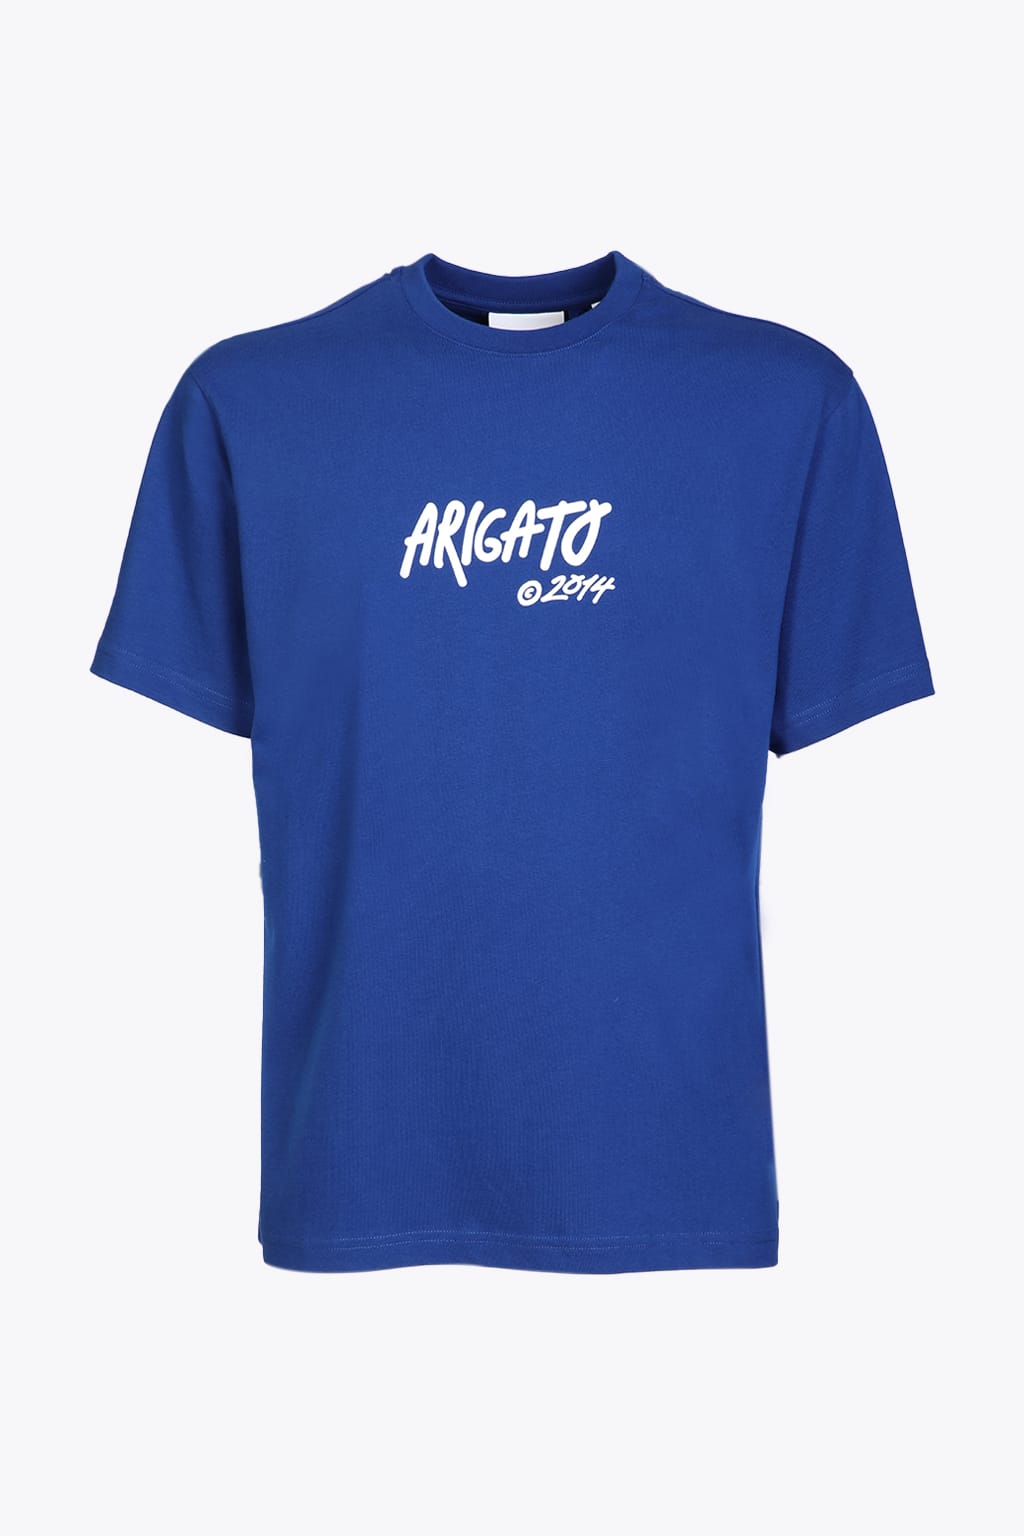 Axel Arigato Arigato Graffiti T-shirt Royal blue t-shirt with logo - Arigato graffiti t-shirt